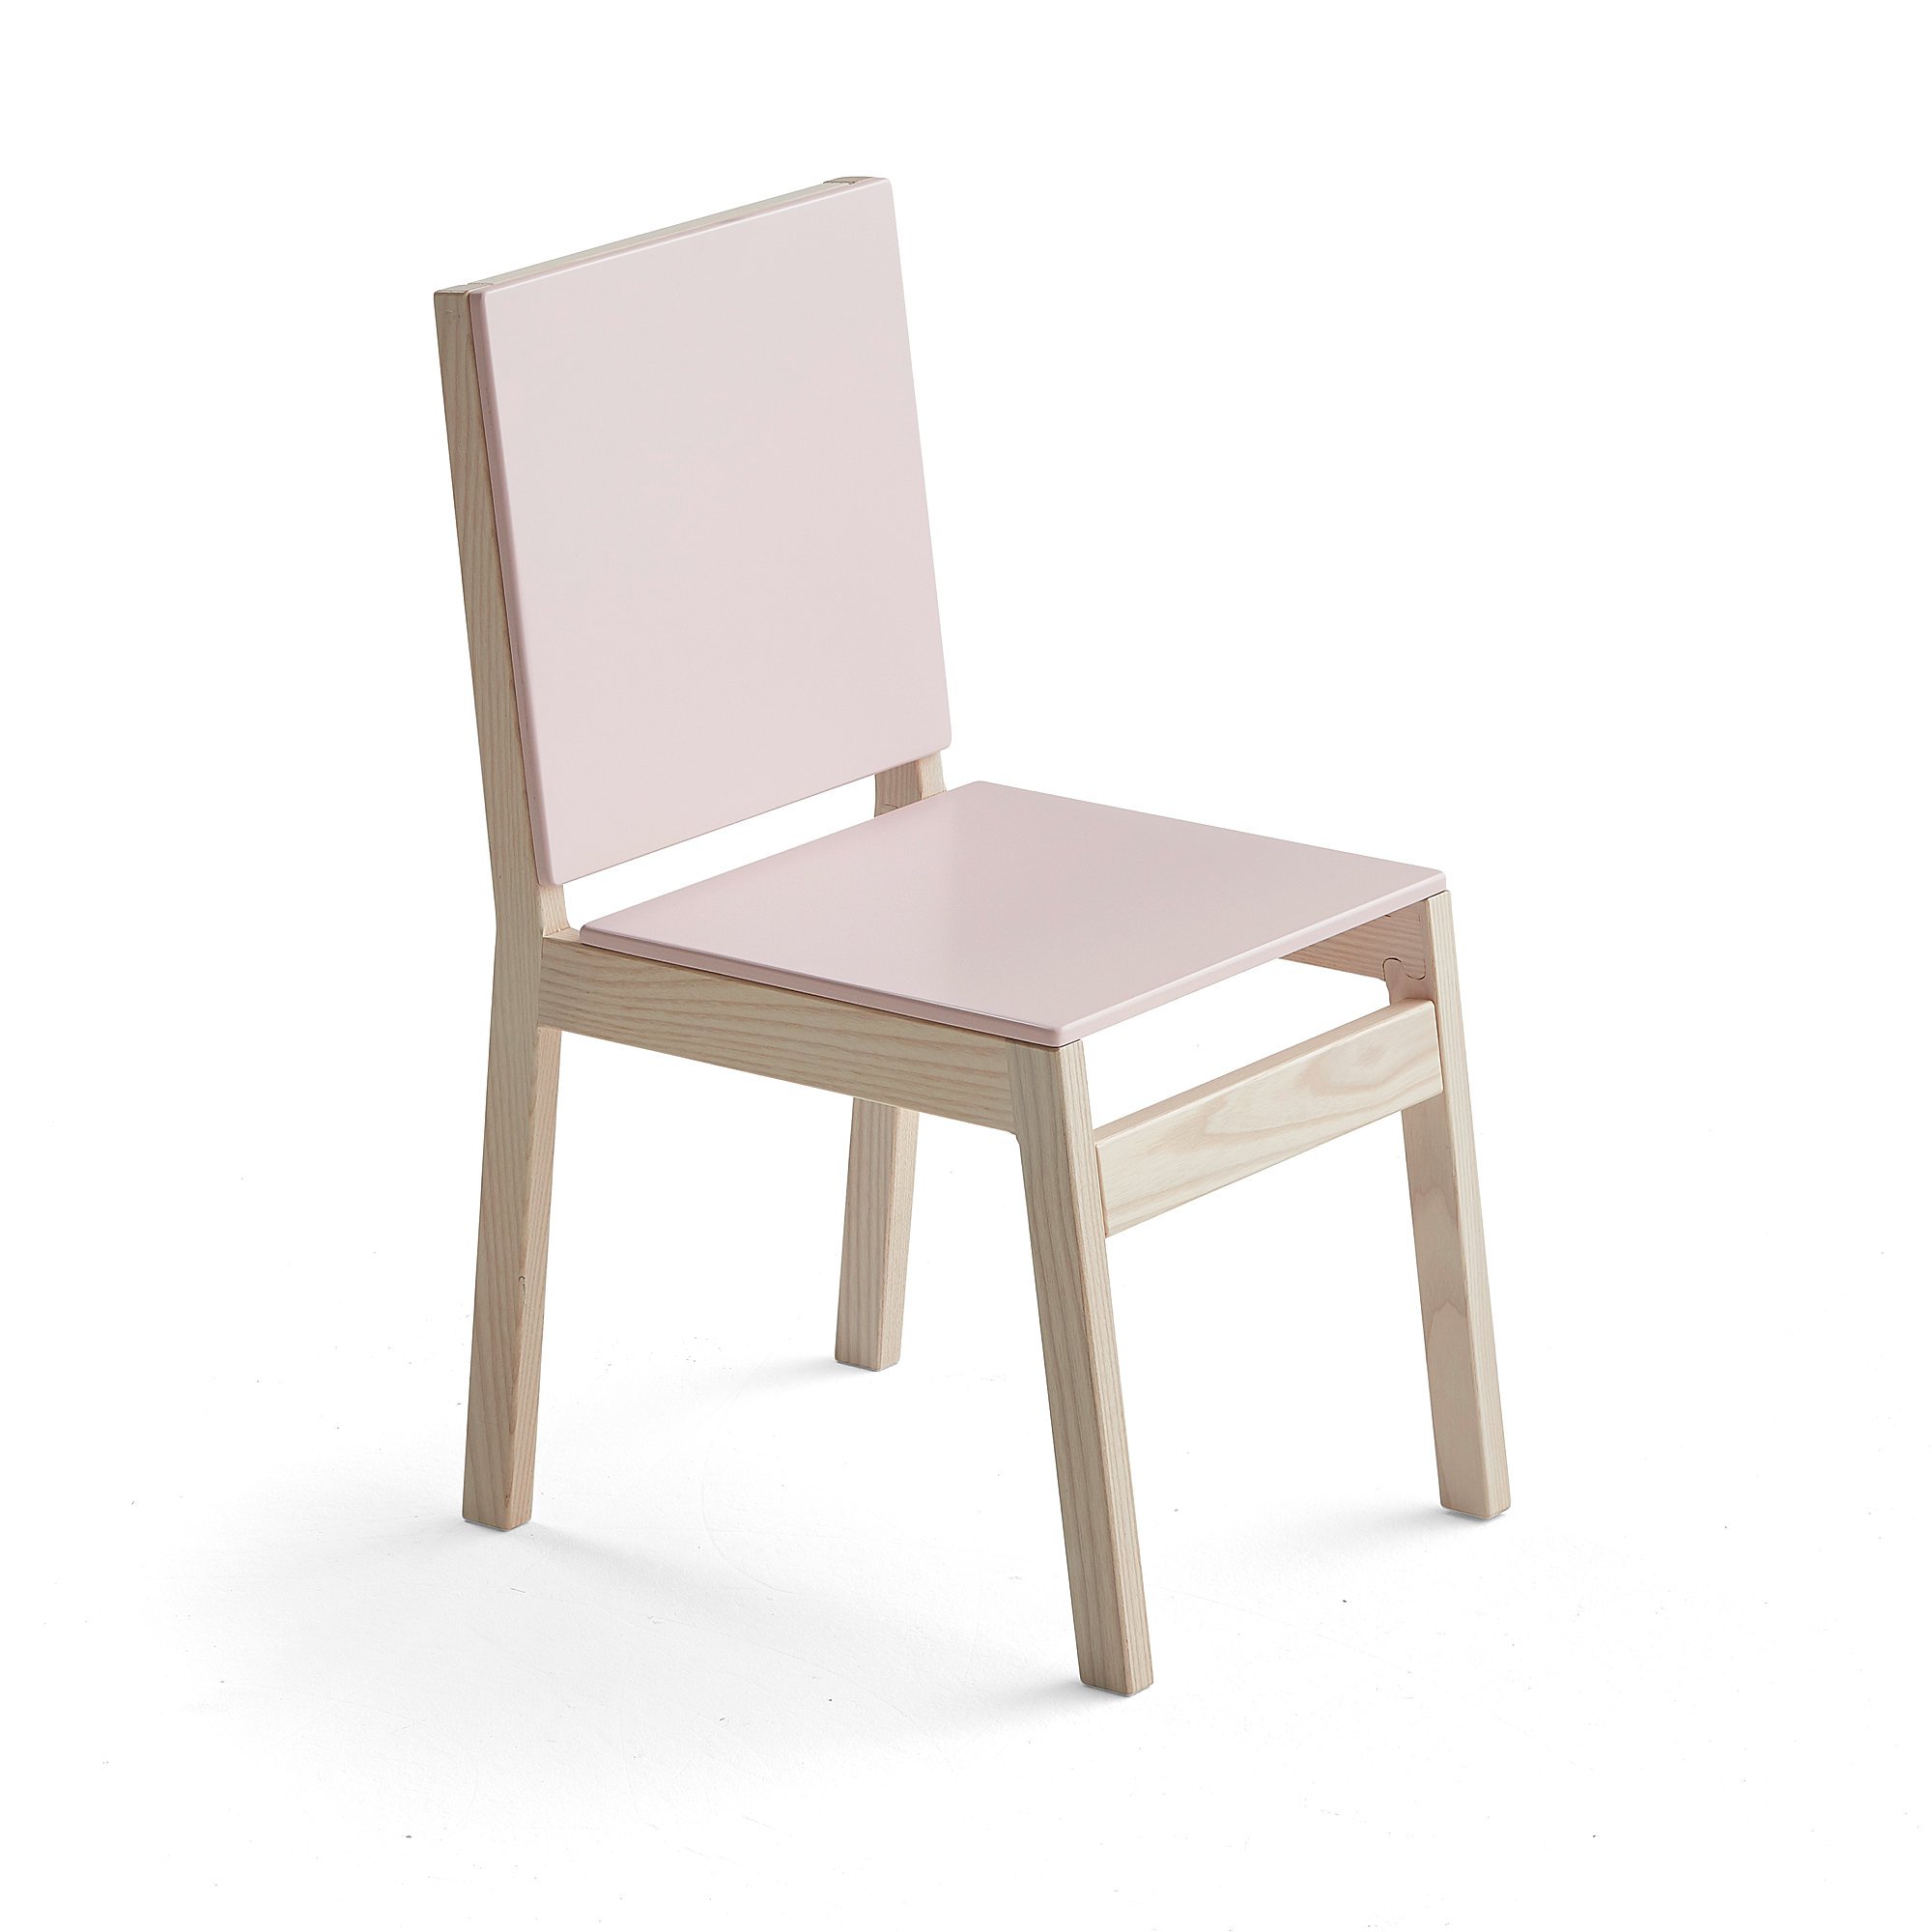 Children's chair WILMA, H 300 mm, light pink